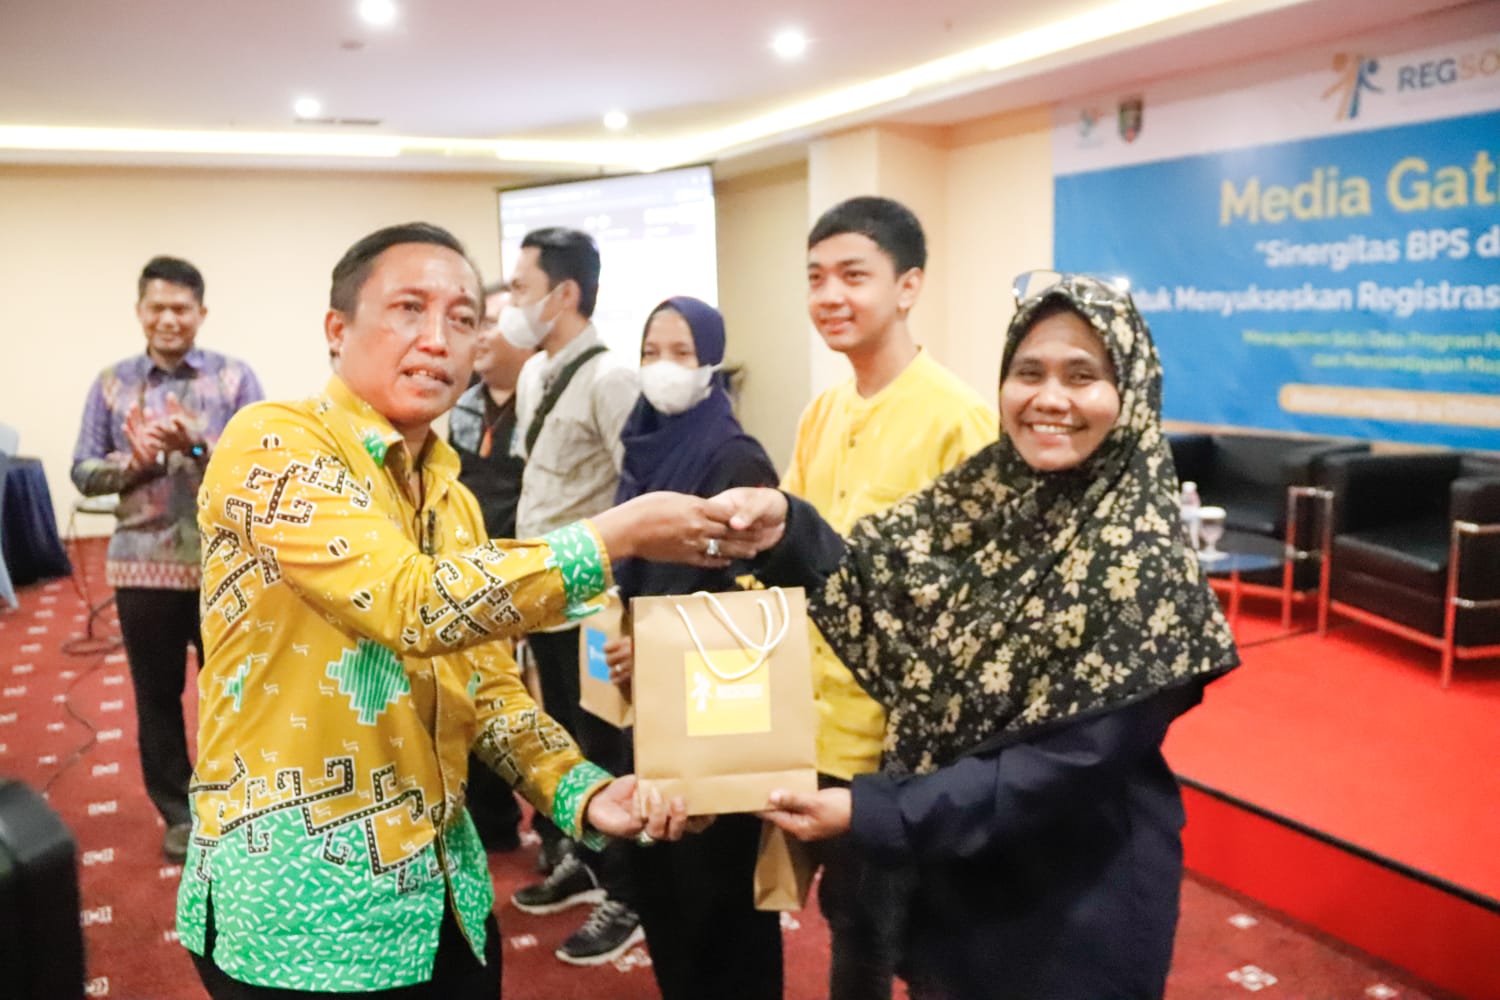 BPS Lampung Gelar Media Gathering Pendataan Awal Regsosek